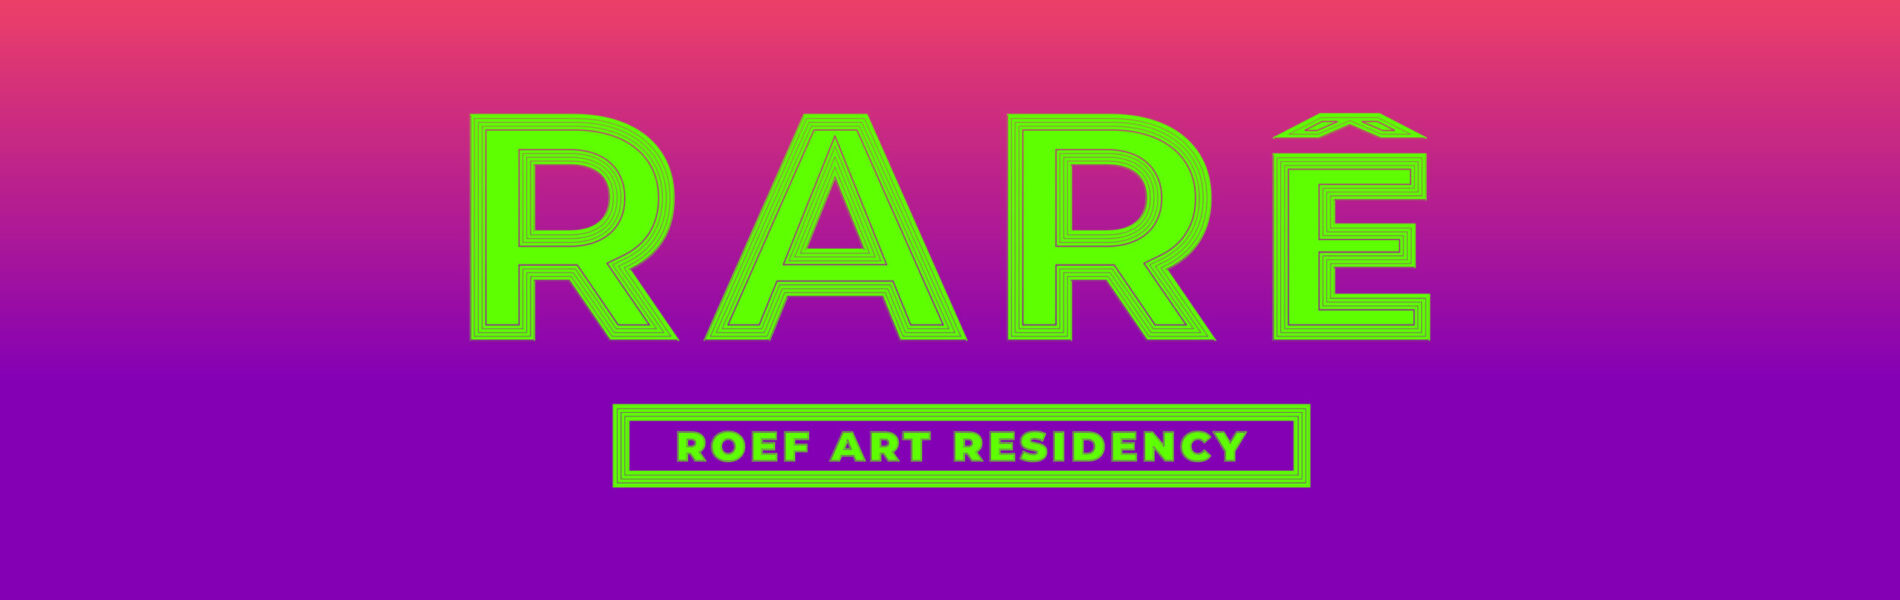 RARe-ROEF-Amsterdam-Zuidoost-Cover-001